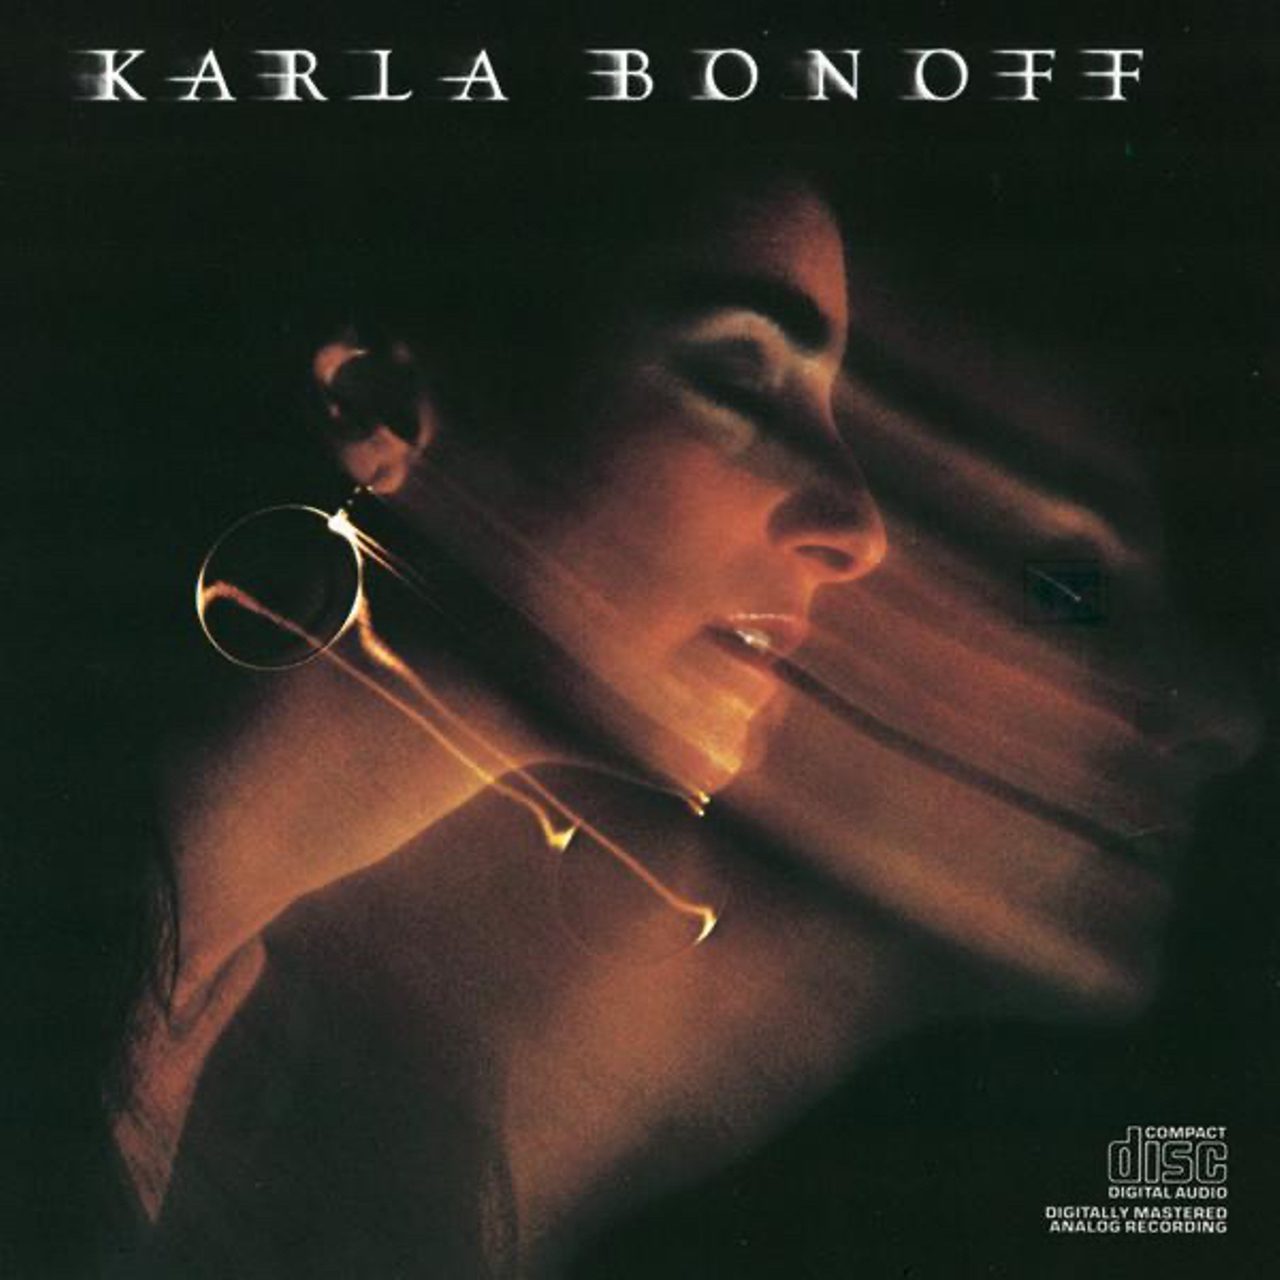 Karla Bonoff - Karla Bonoff cover album